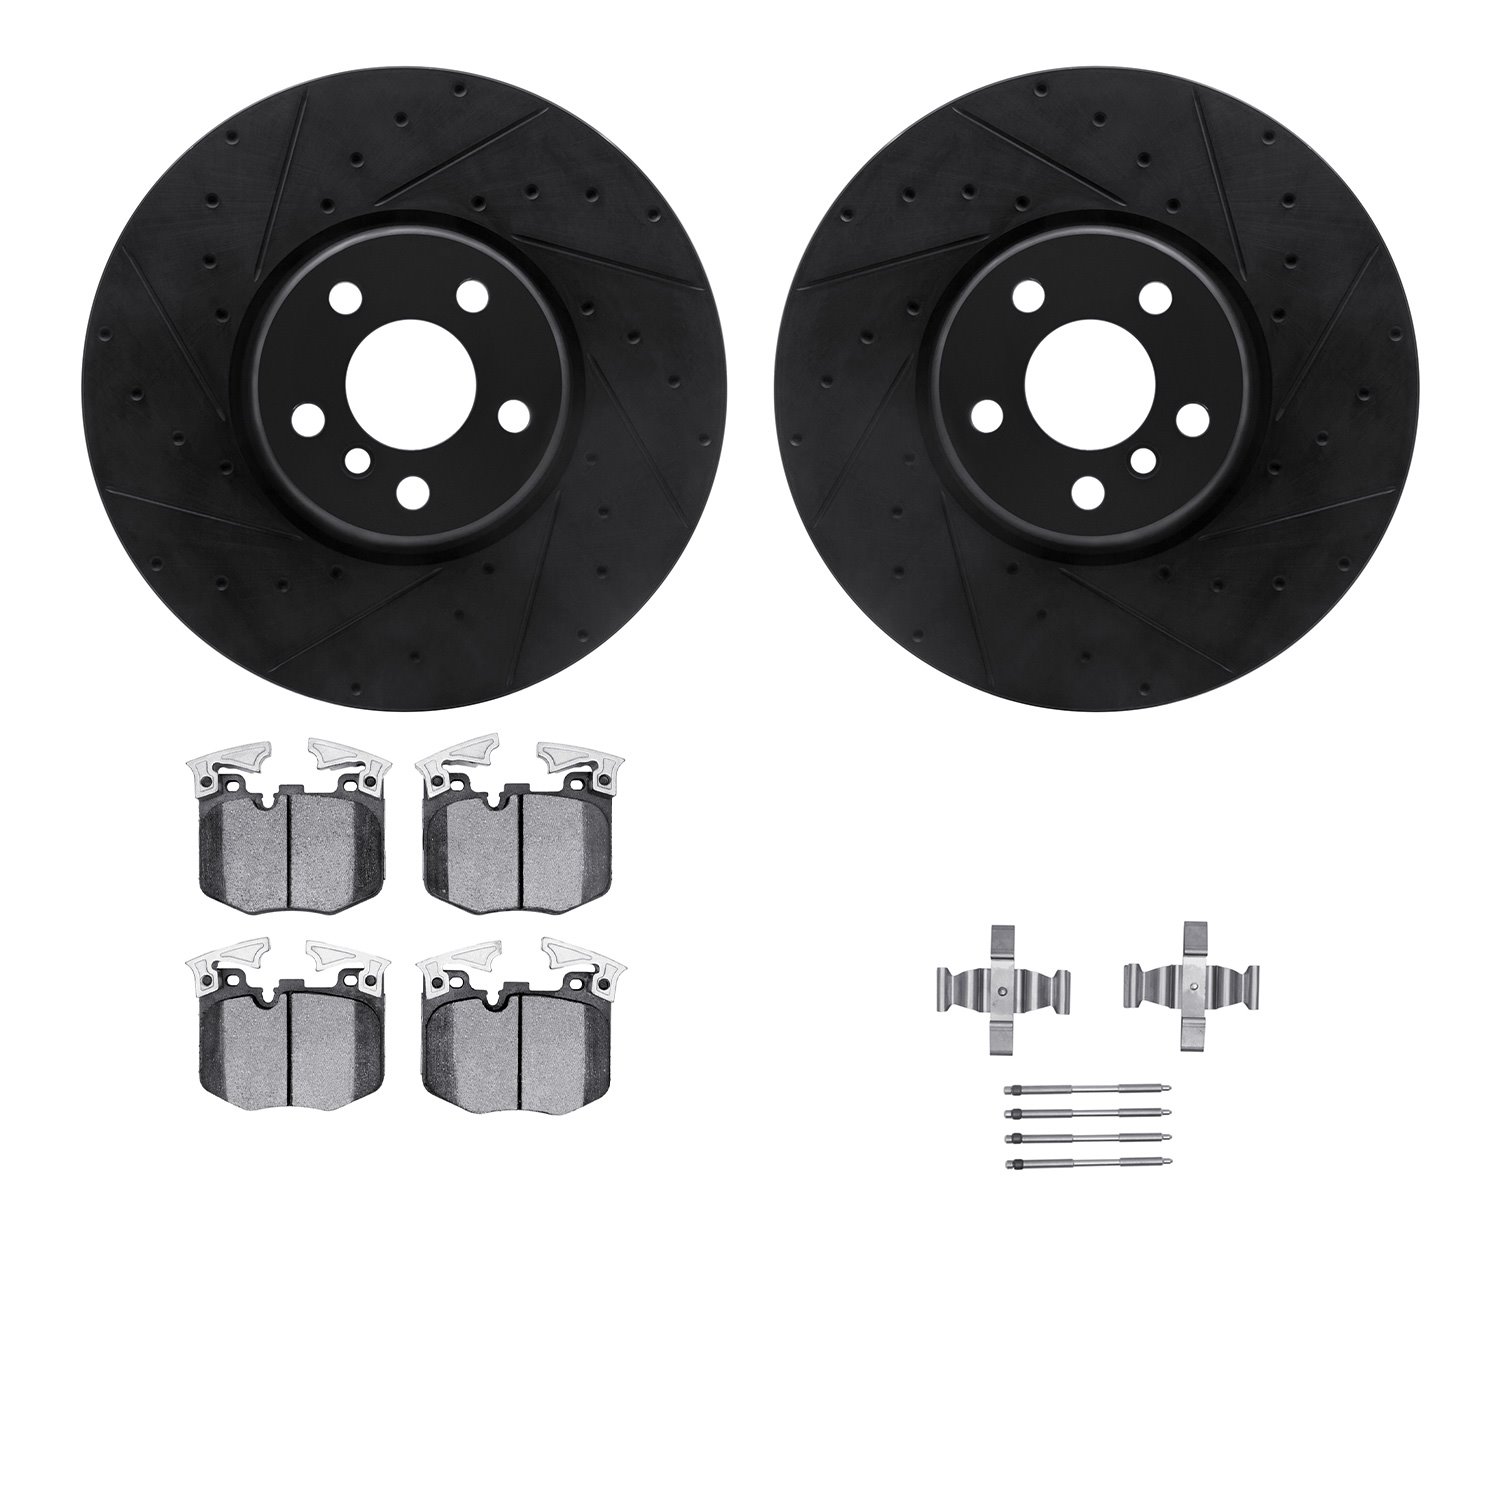 8312-31122 Drilled/Slotted Brake Rotors with 3000-Series Ceramic Brake Pads Kit & Hardware [Black], Fits Select Multiple Makes/M